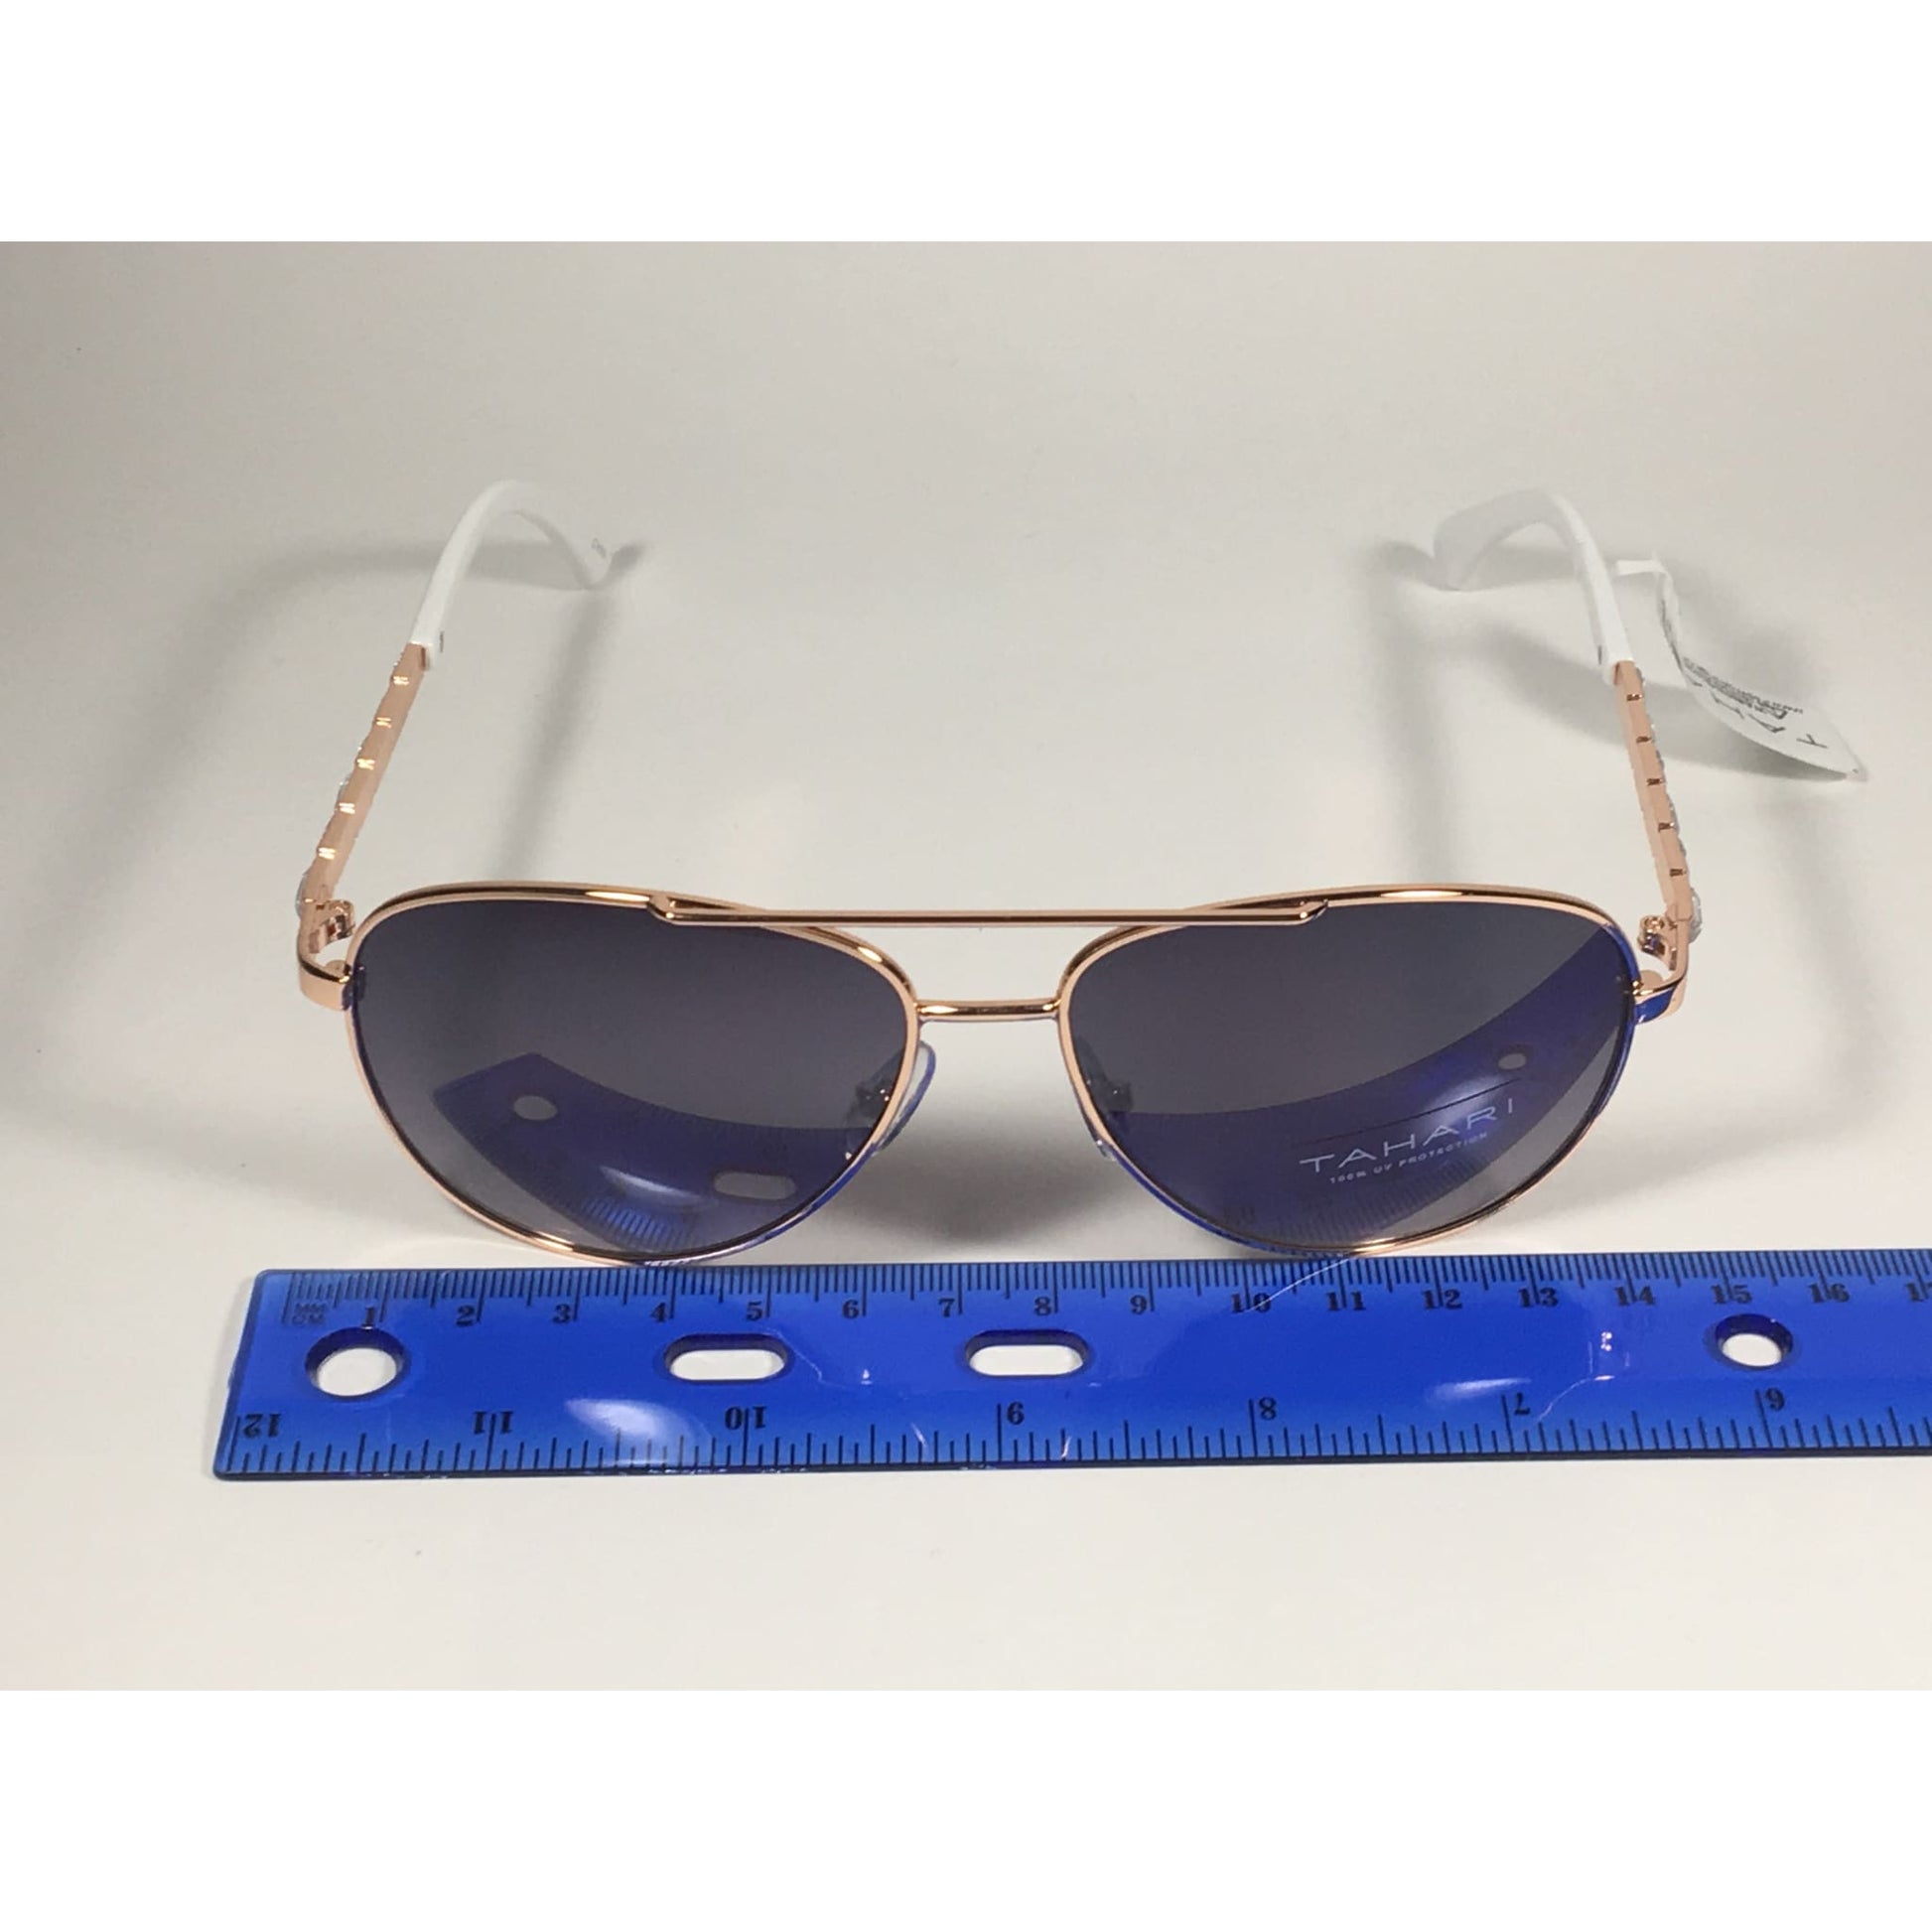 Tahari Aviator Pilot Sunglasses Rhinestone Jewels Rose Gold White Frame Smoke Gradient Lens TH737 RGDWH - Sunglasses